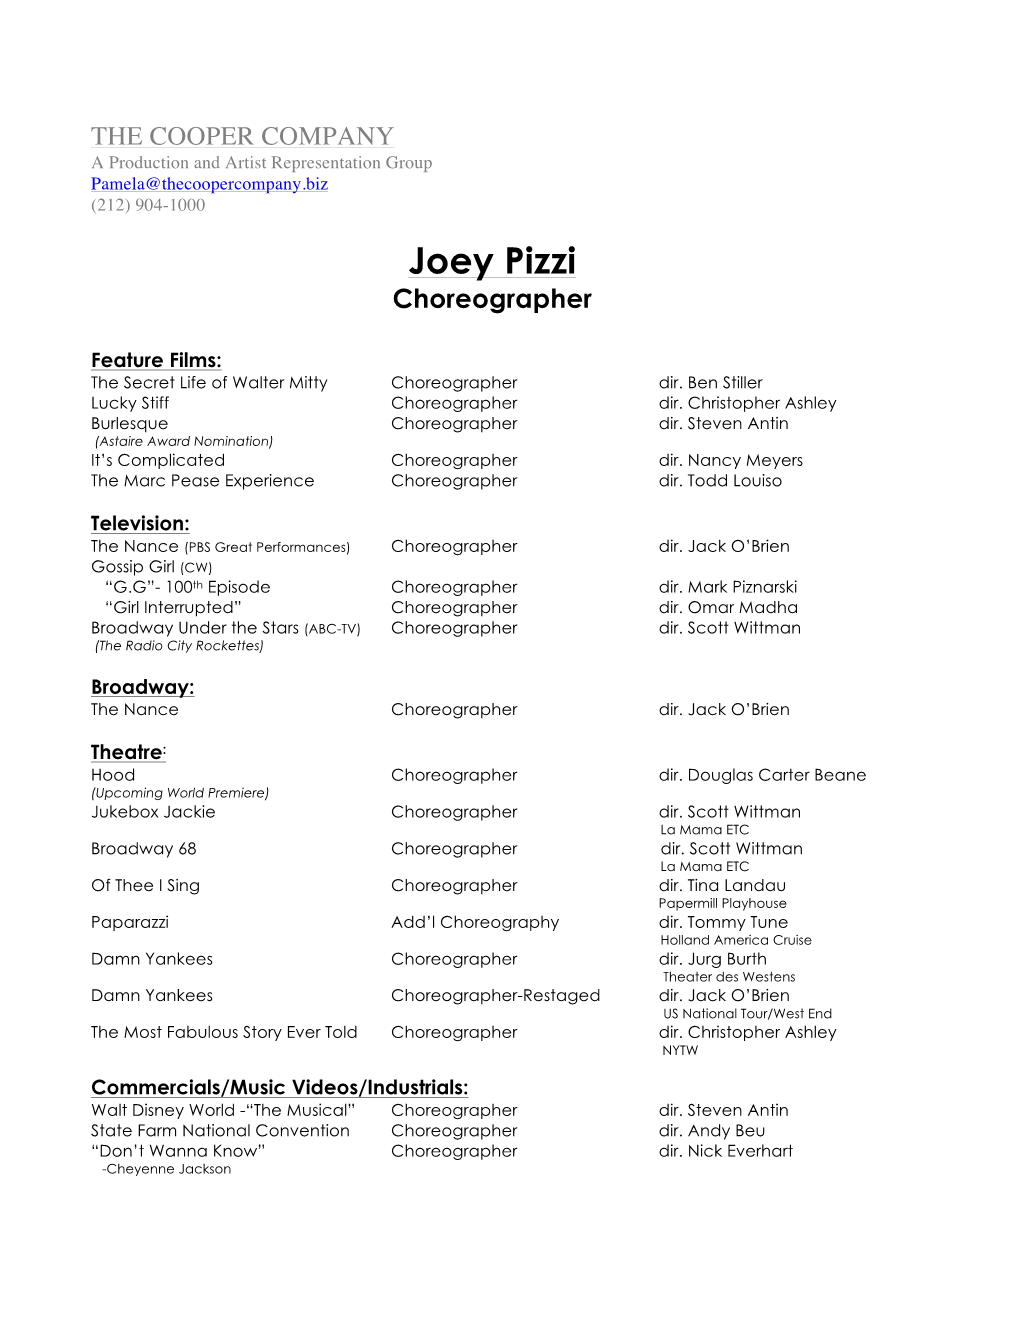 Joey Pizzi Choreographer